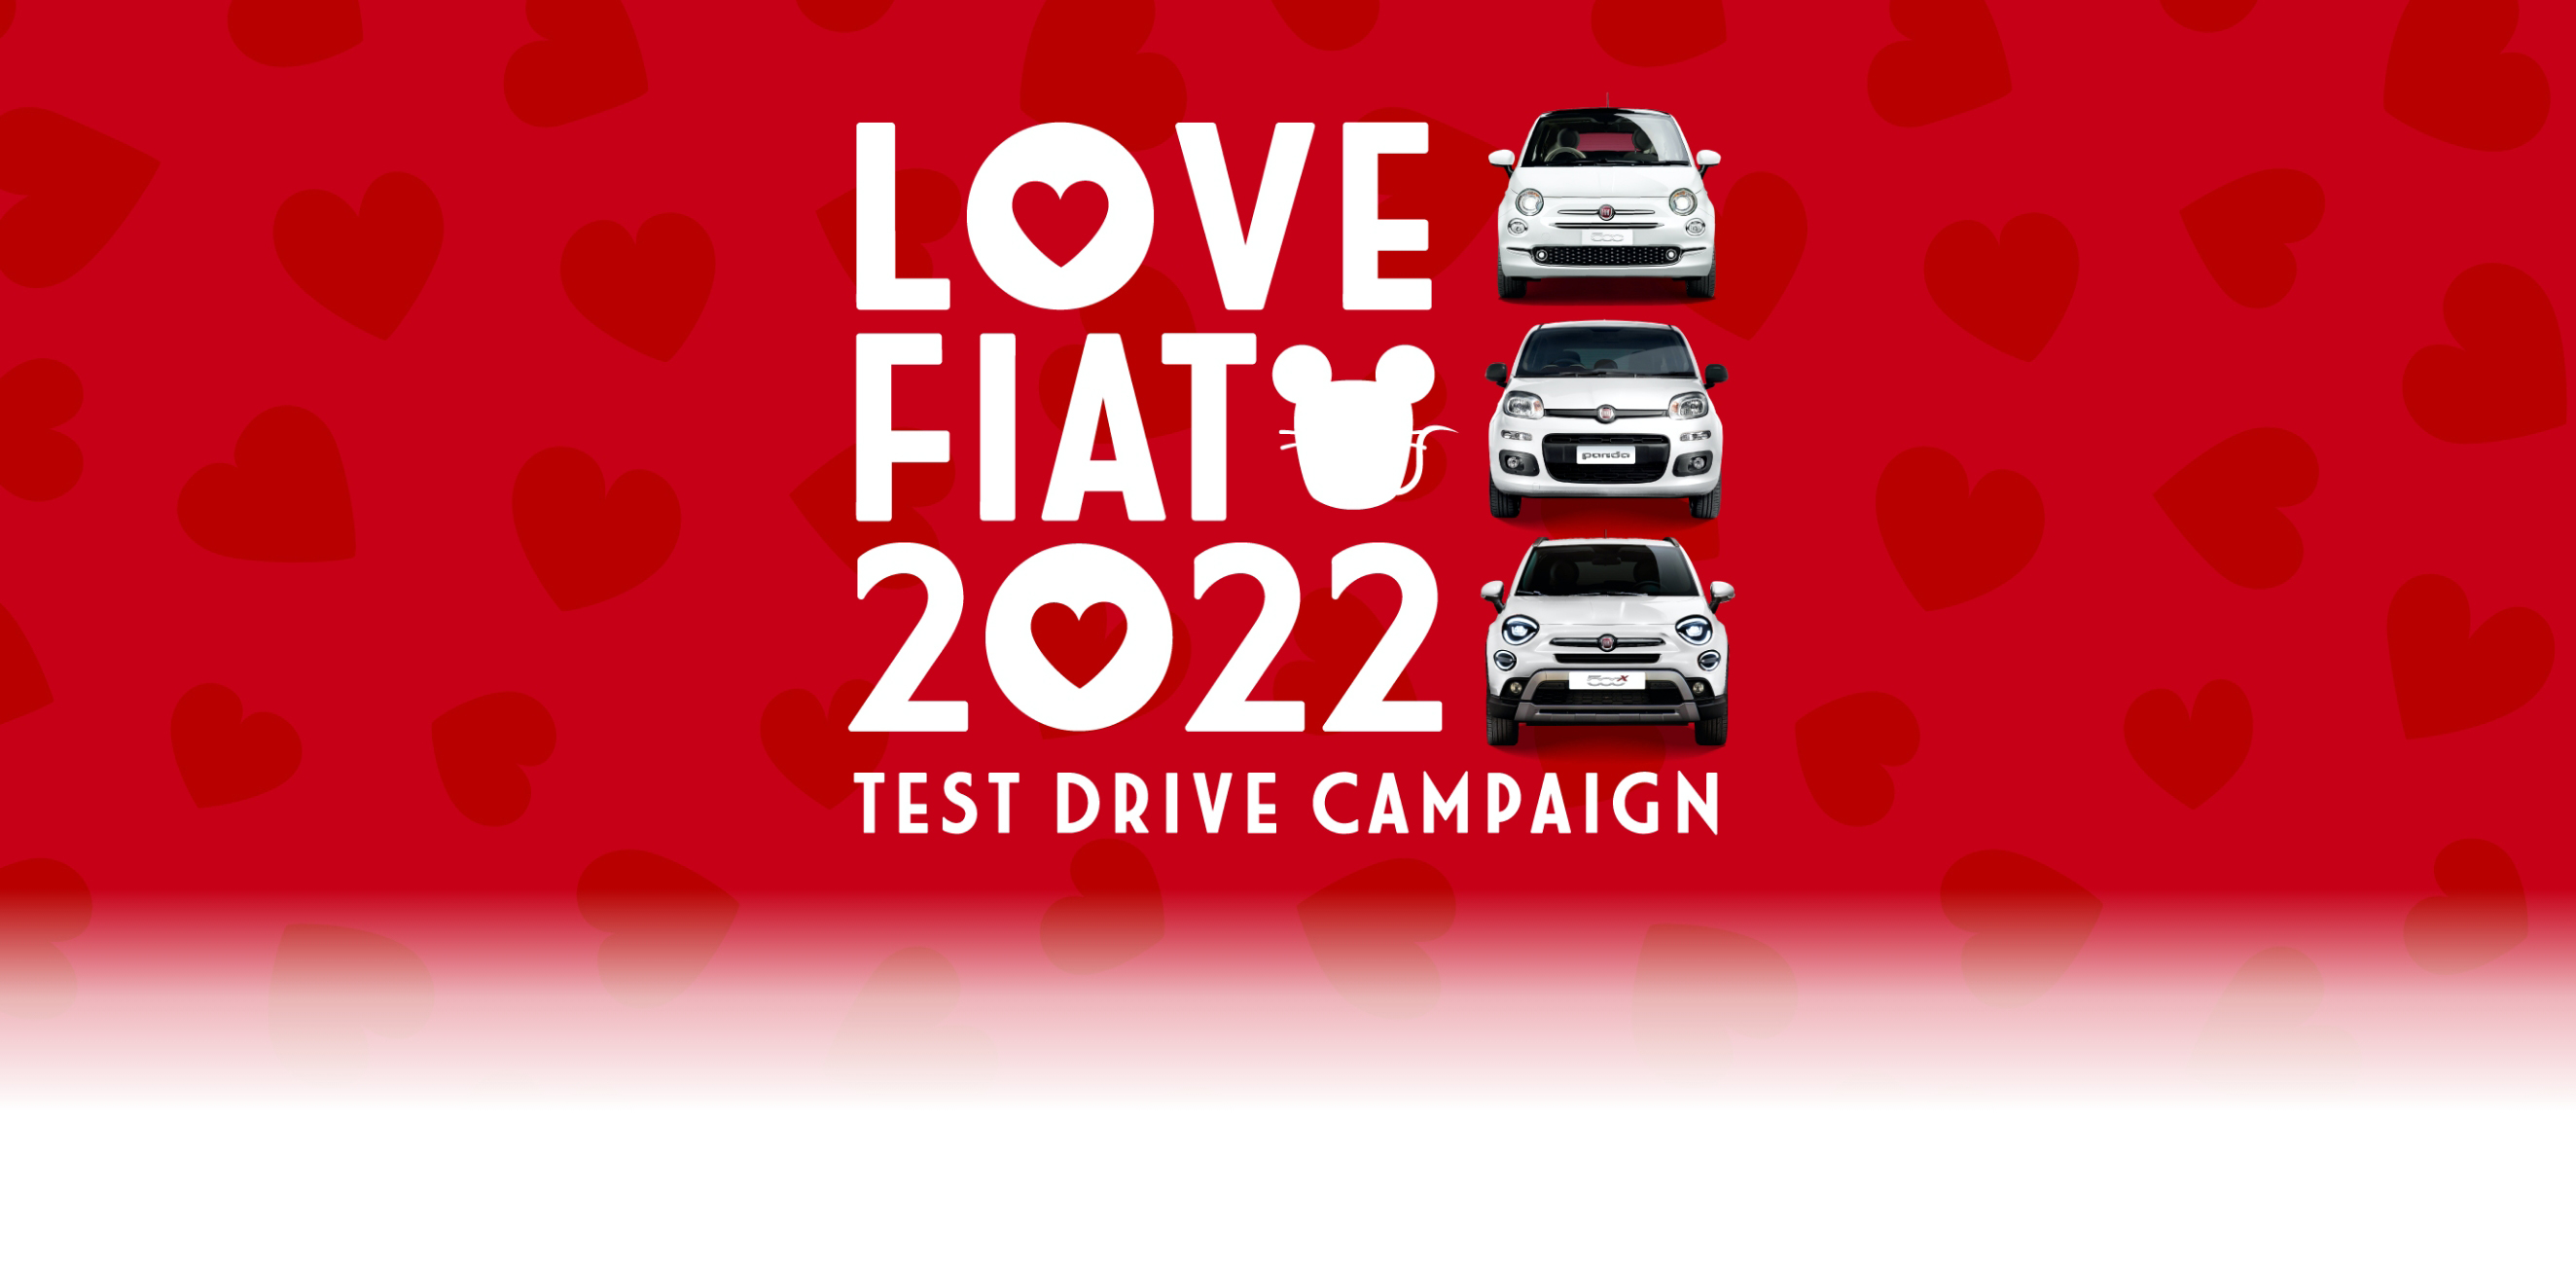 LOVE FIAT 2022